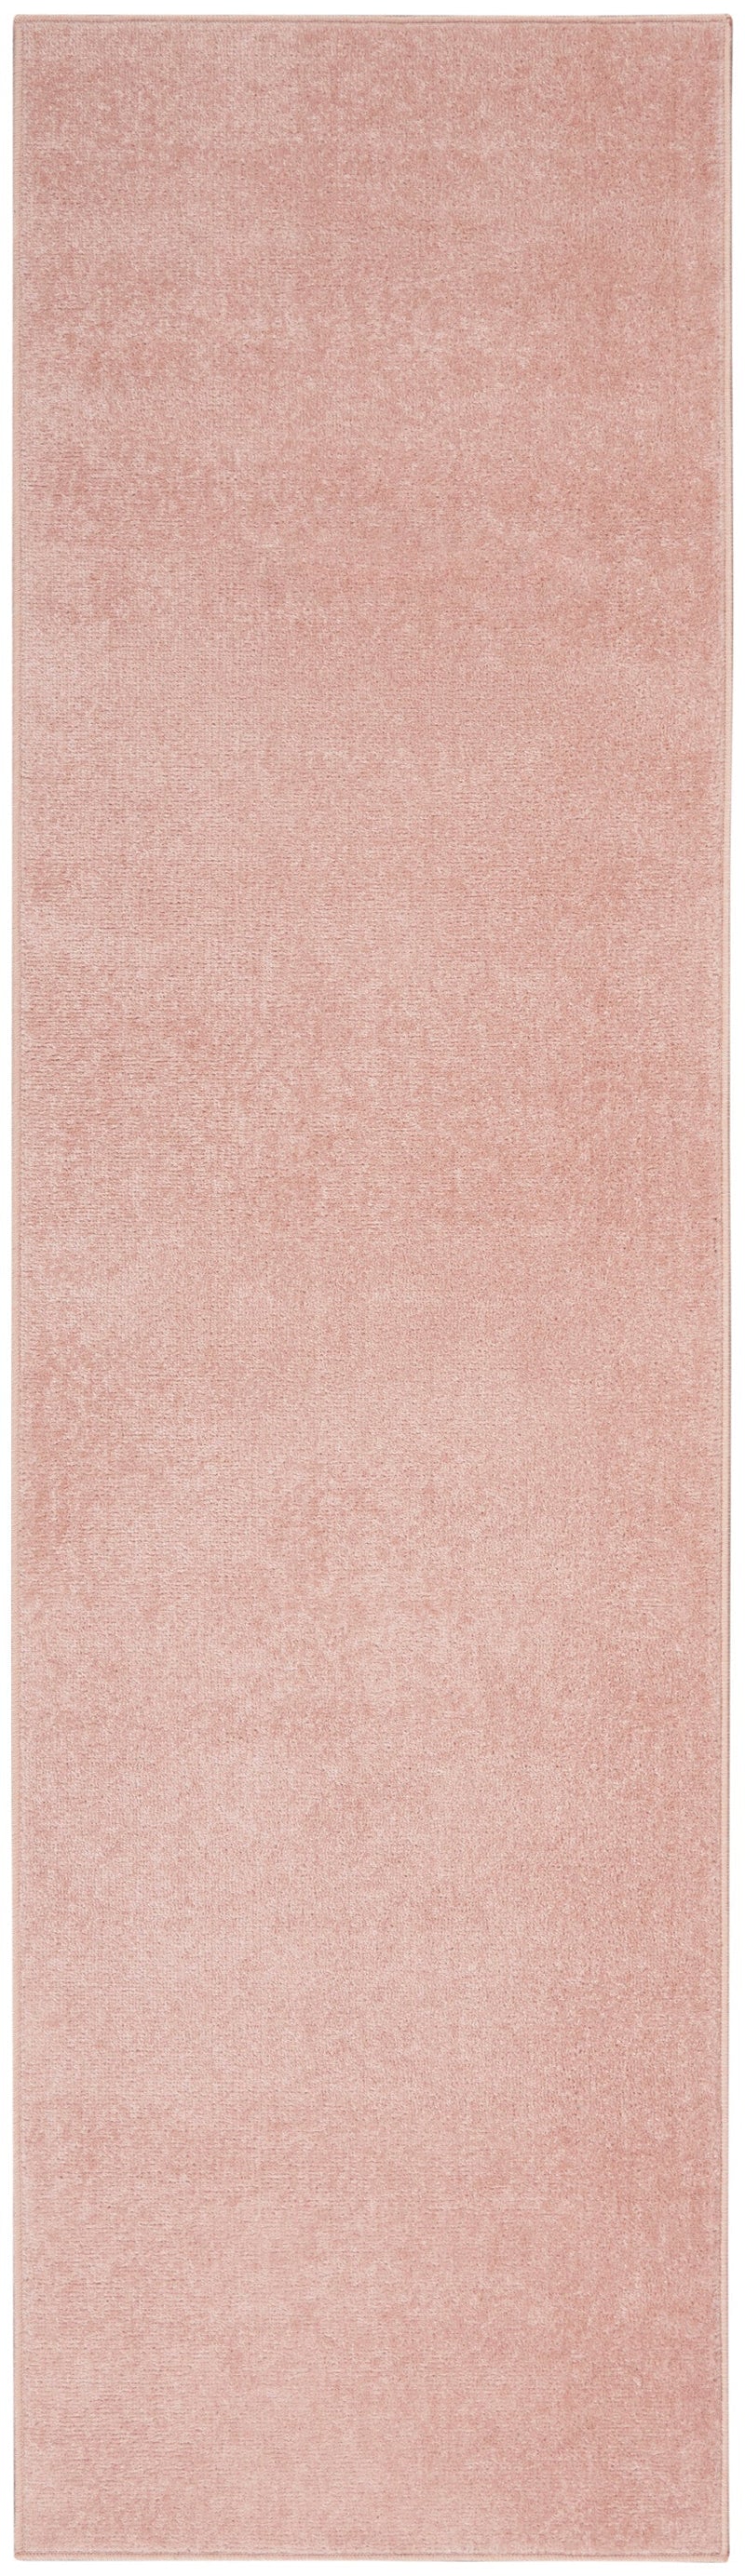 media image for nourison essentials pink rug by nourison 99446824776 redo 4 225